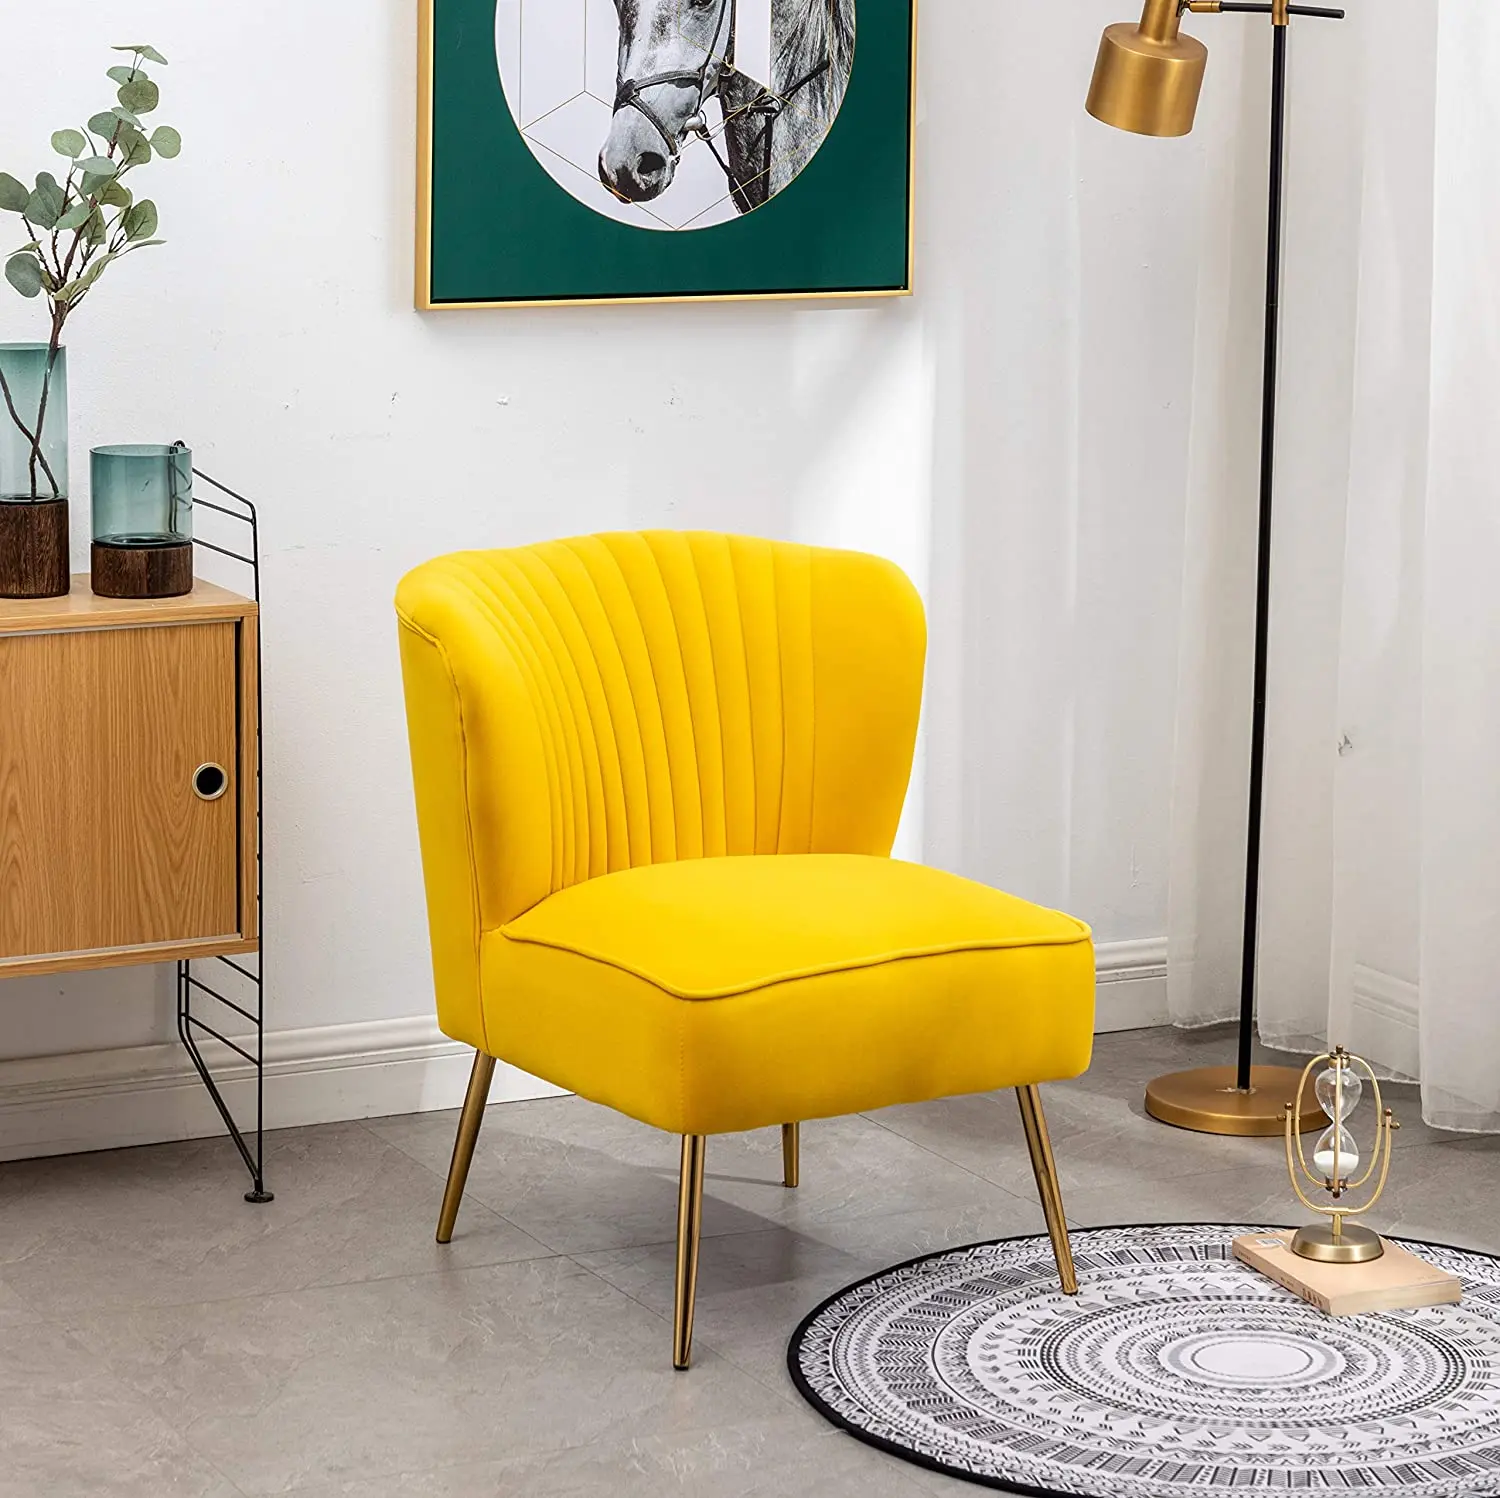 Changde midcentury minimalist modern side chair single home metal leg velvet pink accent chair